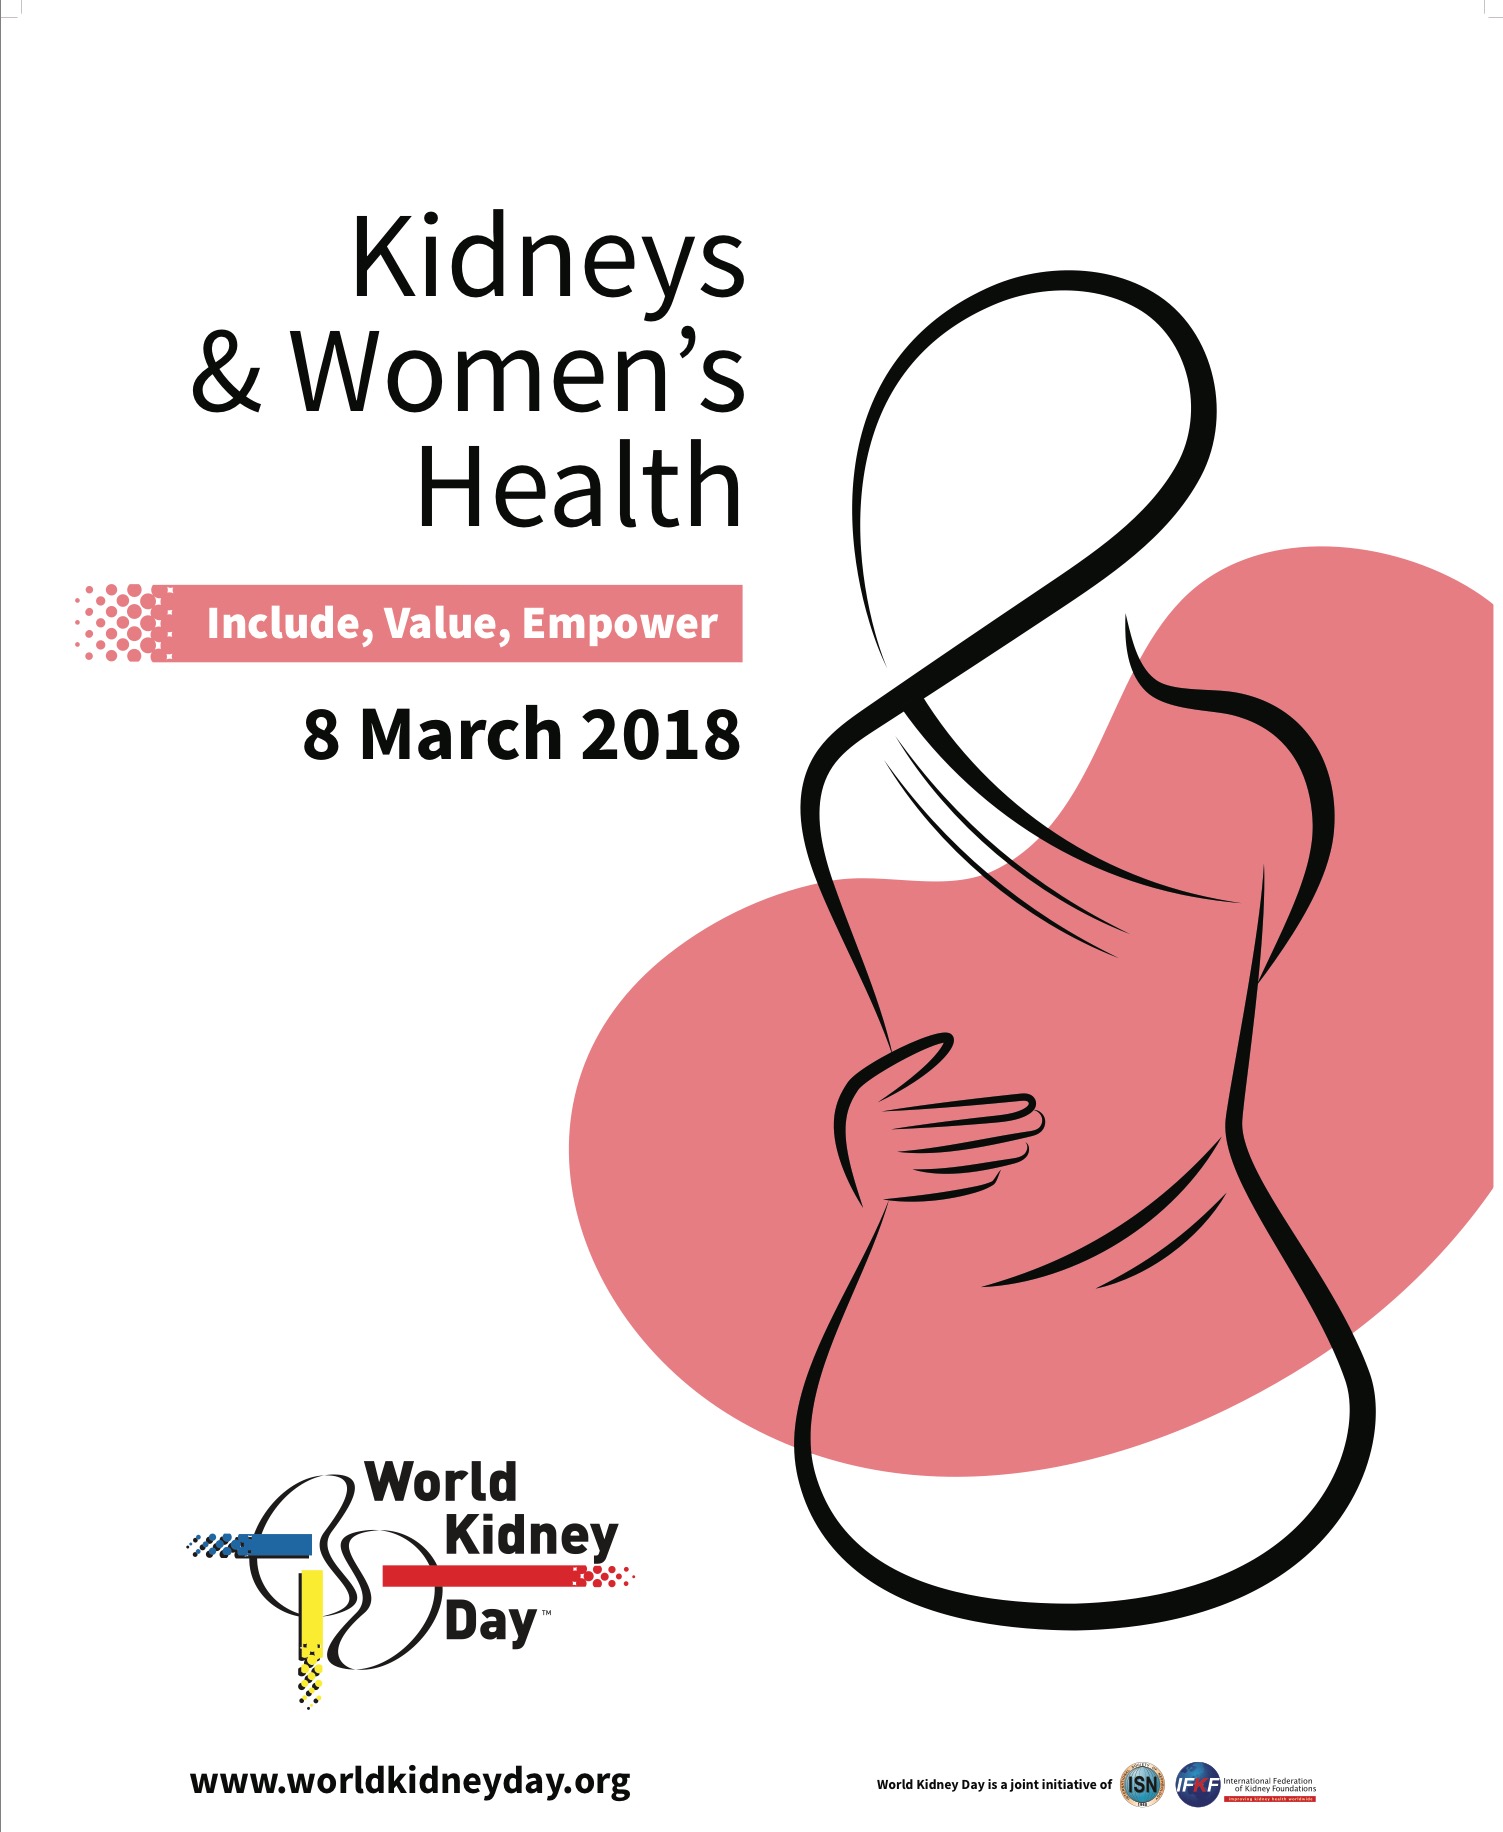 Kidneys and women health for world kidney day 